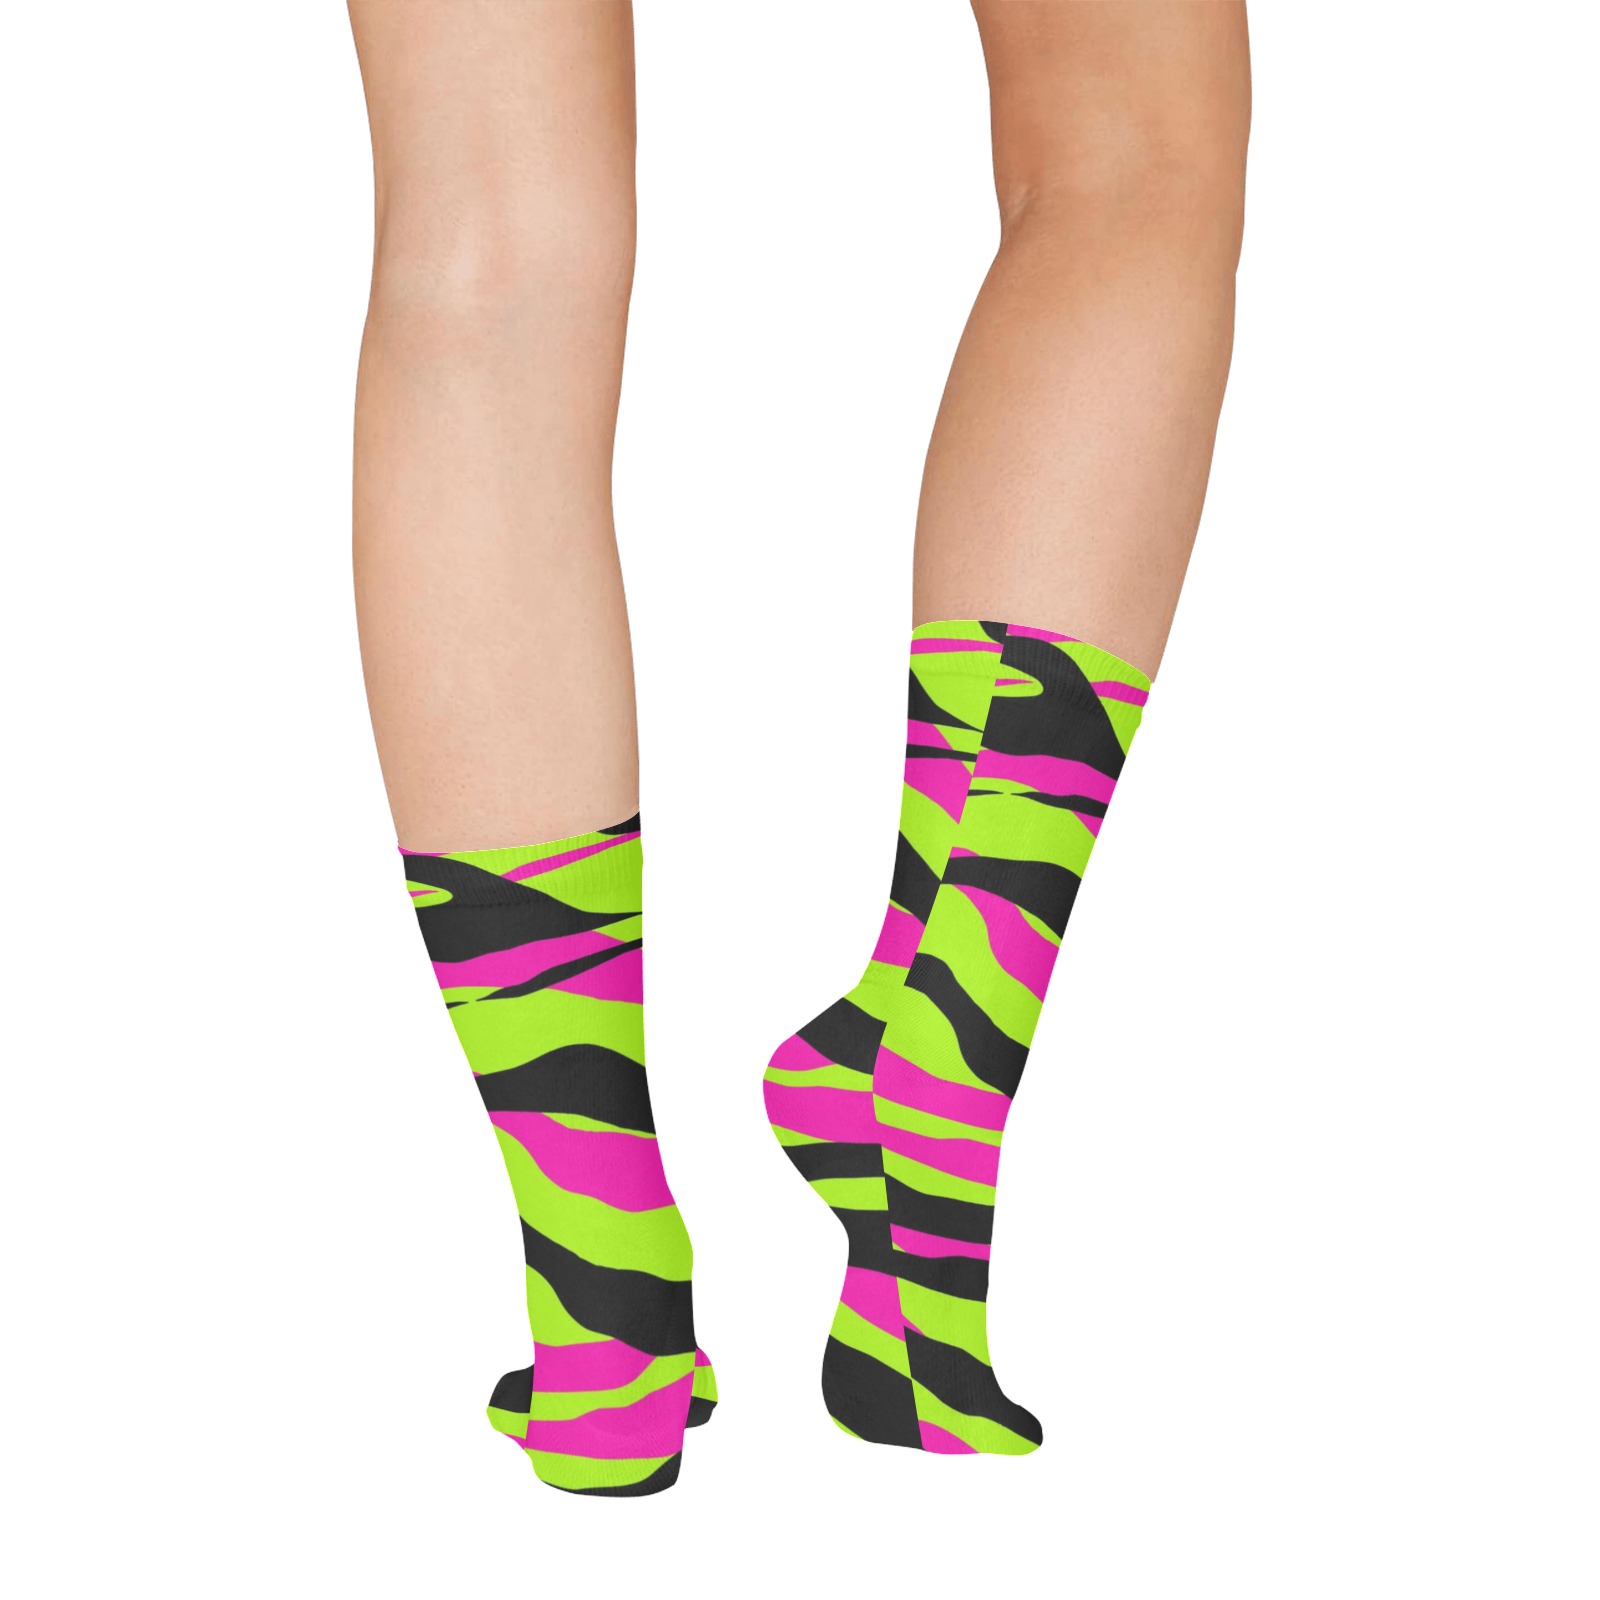 Pink, Neon Green, & Black Striped Socks Custom Socks Bright Socks Colorful Fun Socks All Over Print Socks for Women